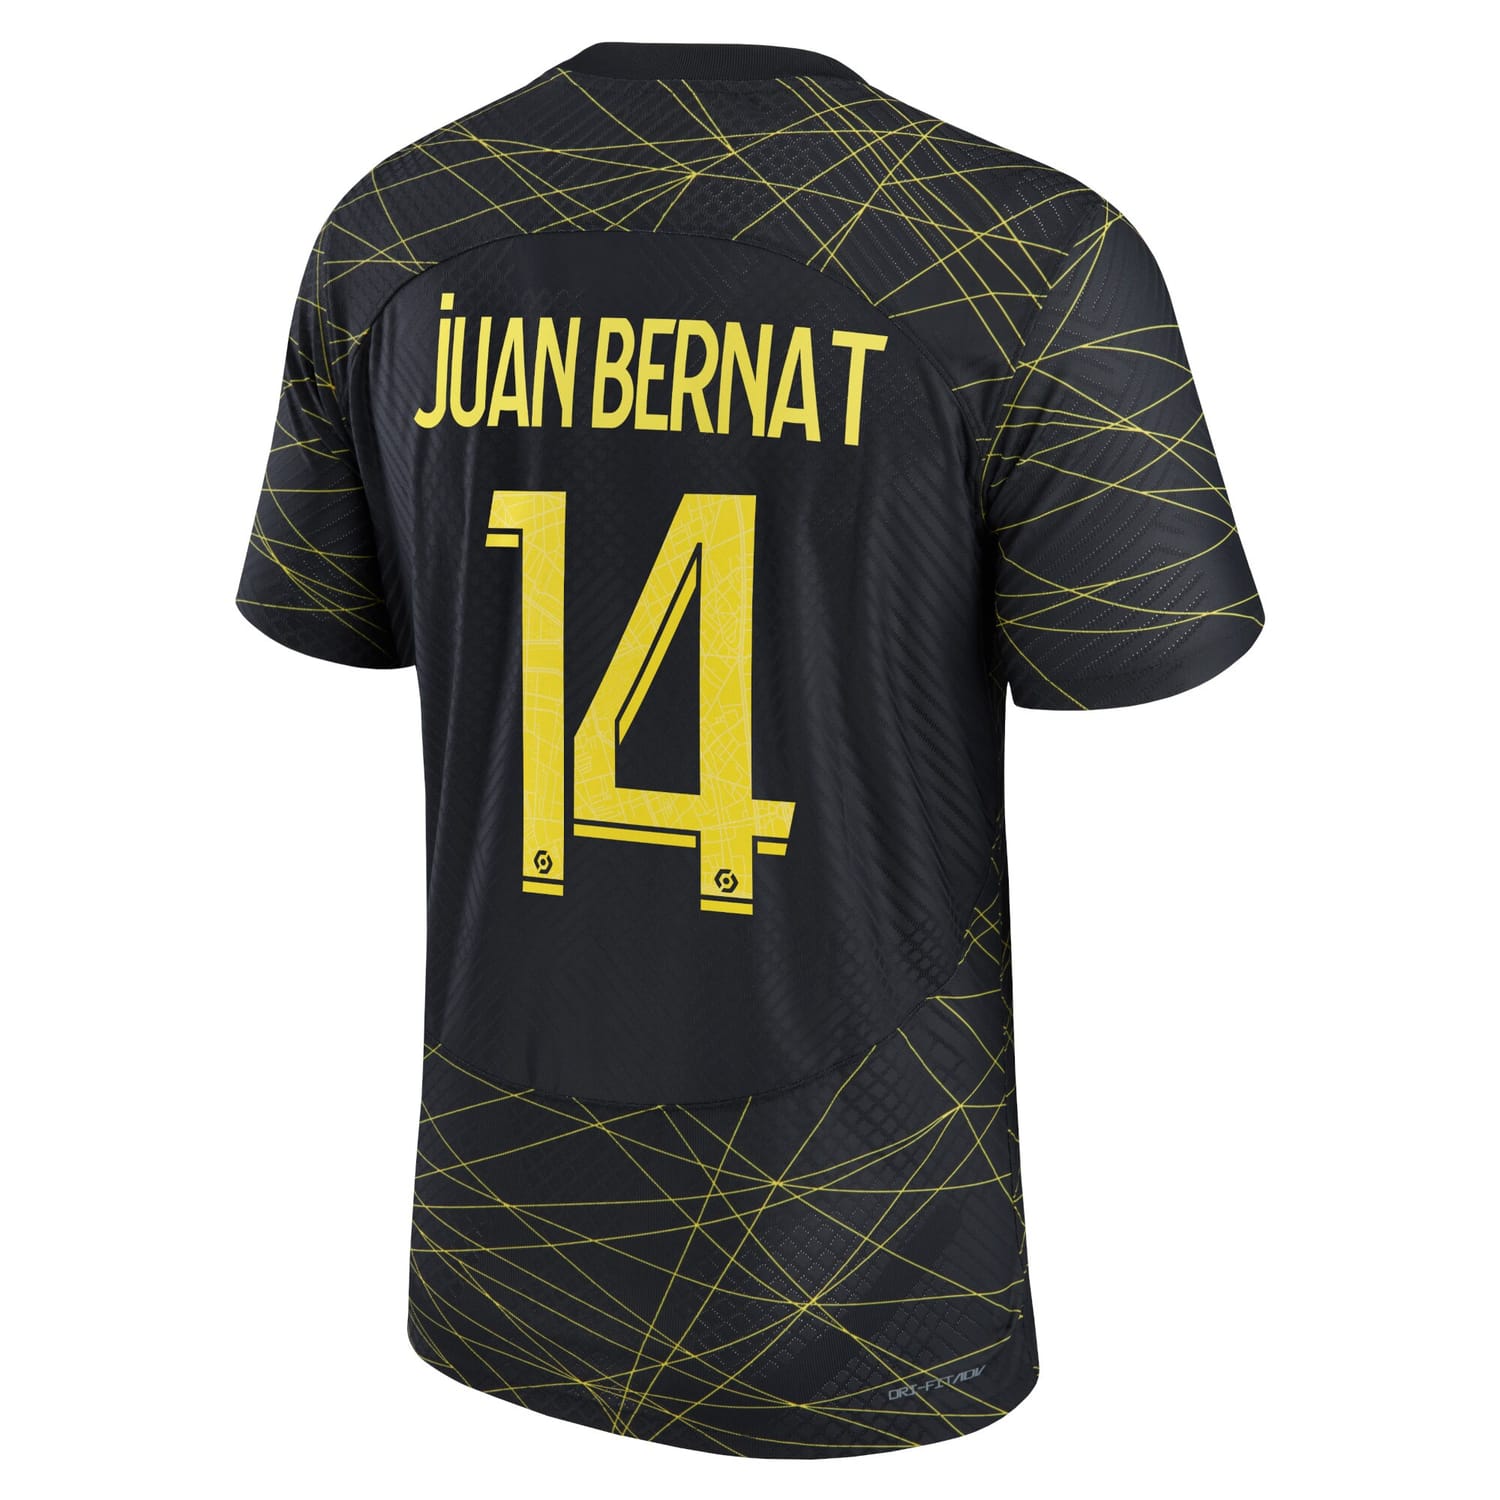 Ligue 1 Paris Saint-Germain Fourth Authentic Jersey Shirt 2022-23 player Juan Bernat 14 printing for Men